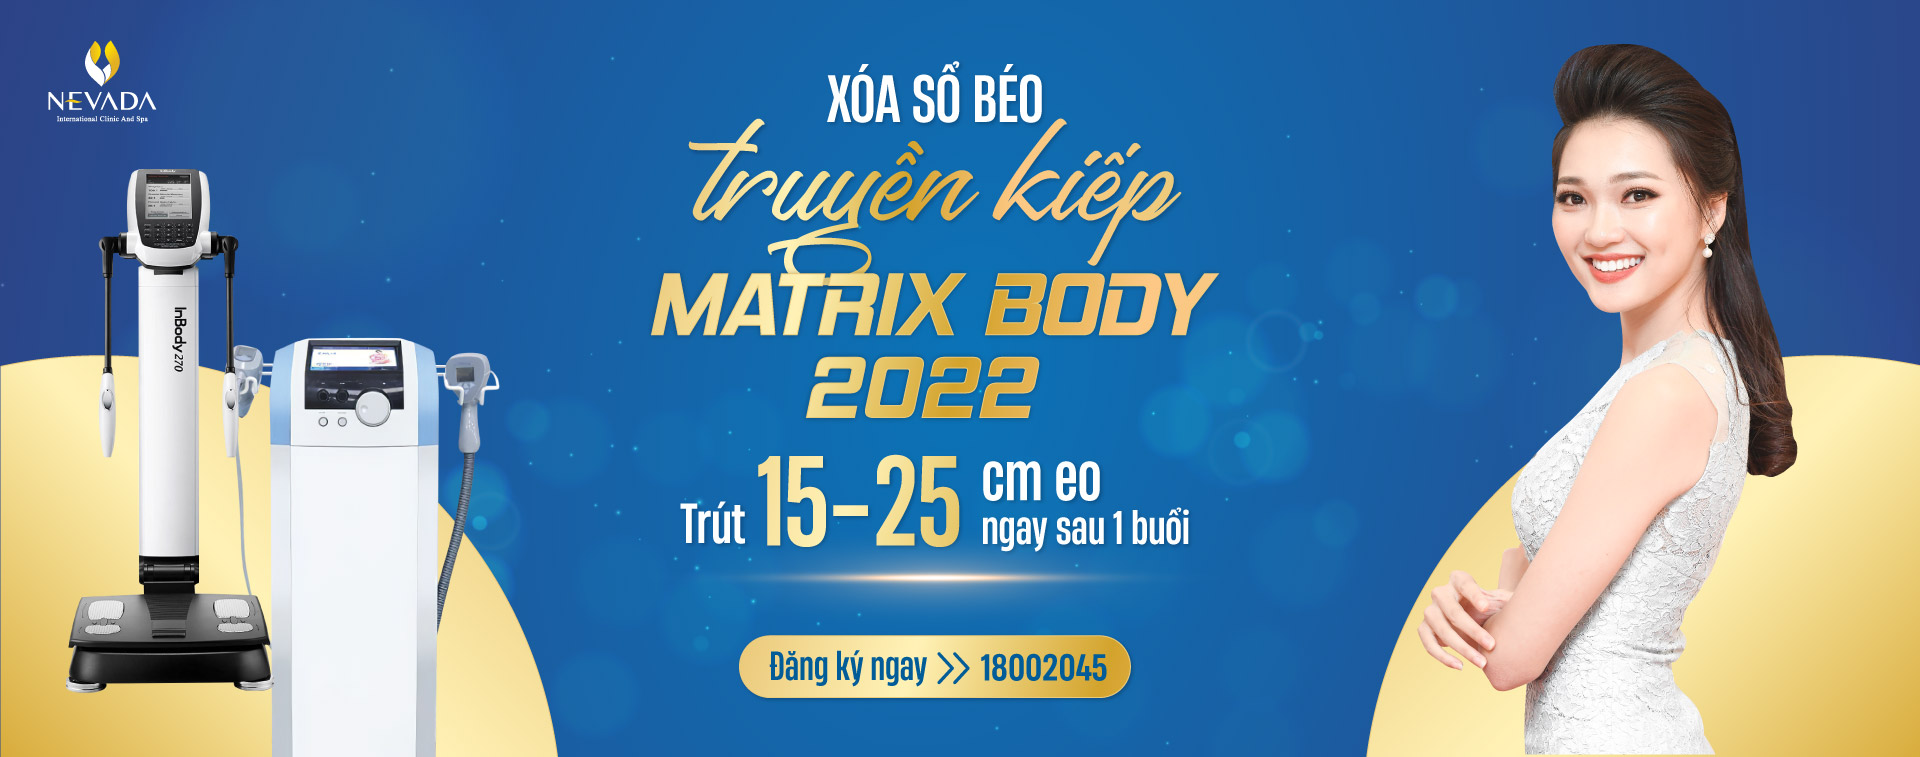 GIẢM BÉO ĐA ĐIỂM MATRIX BODY 2022